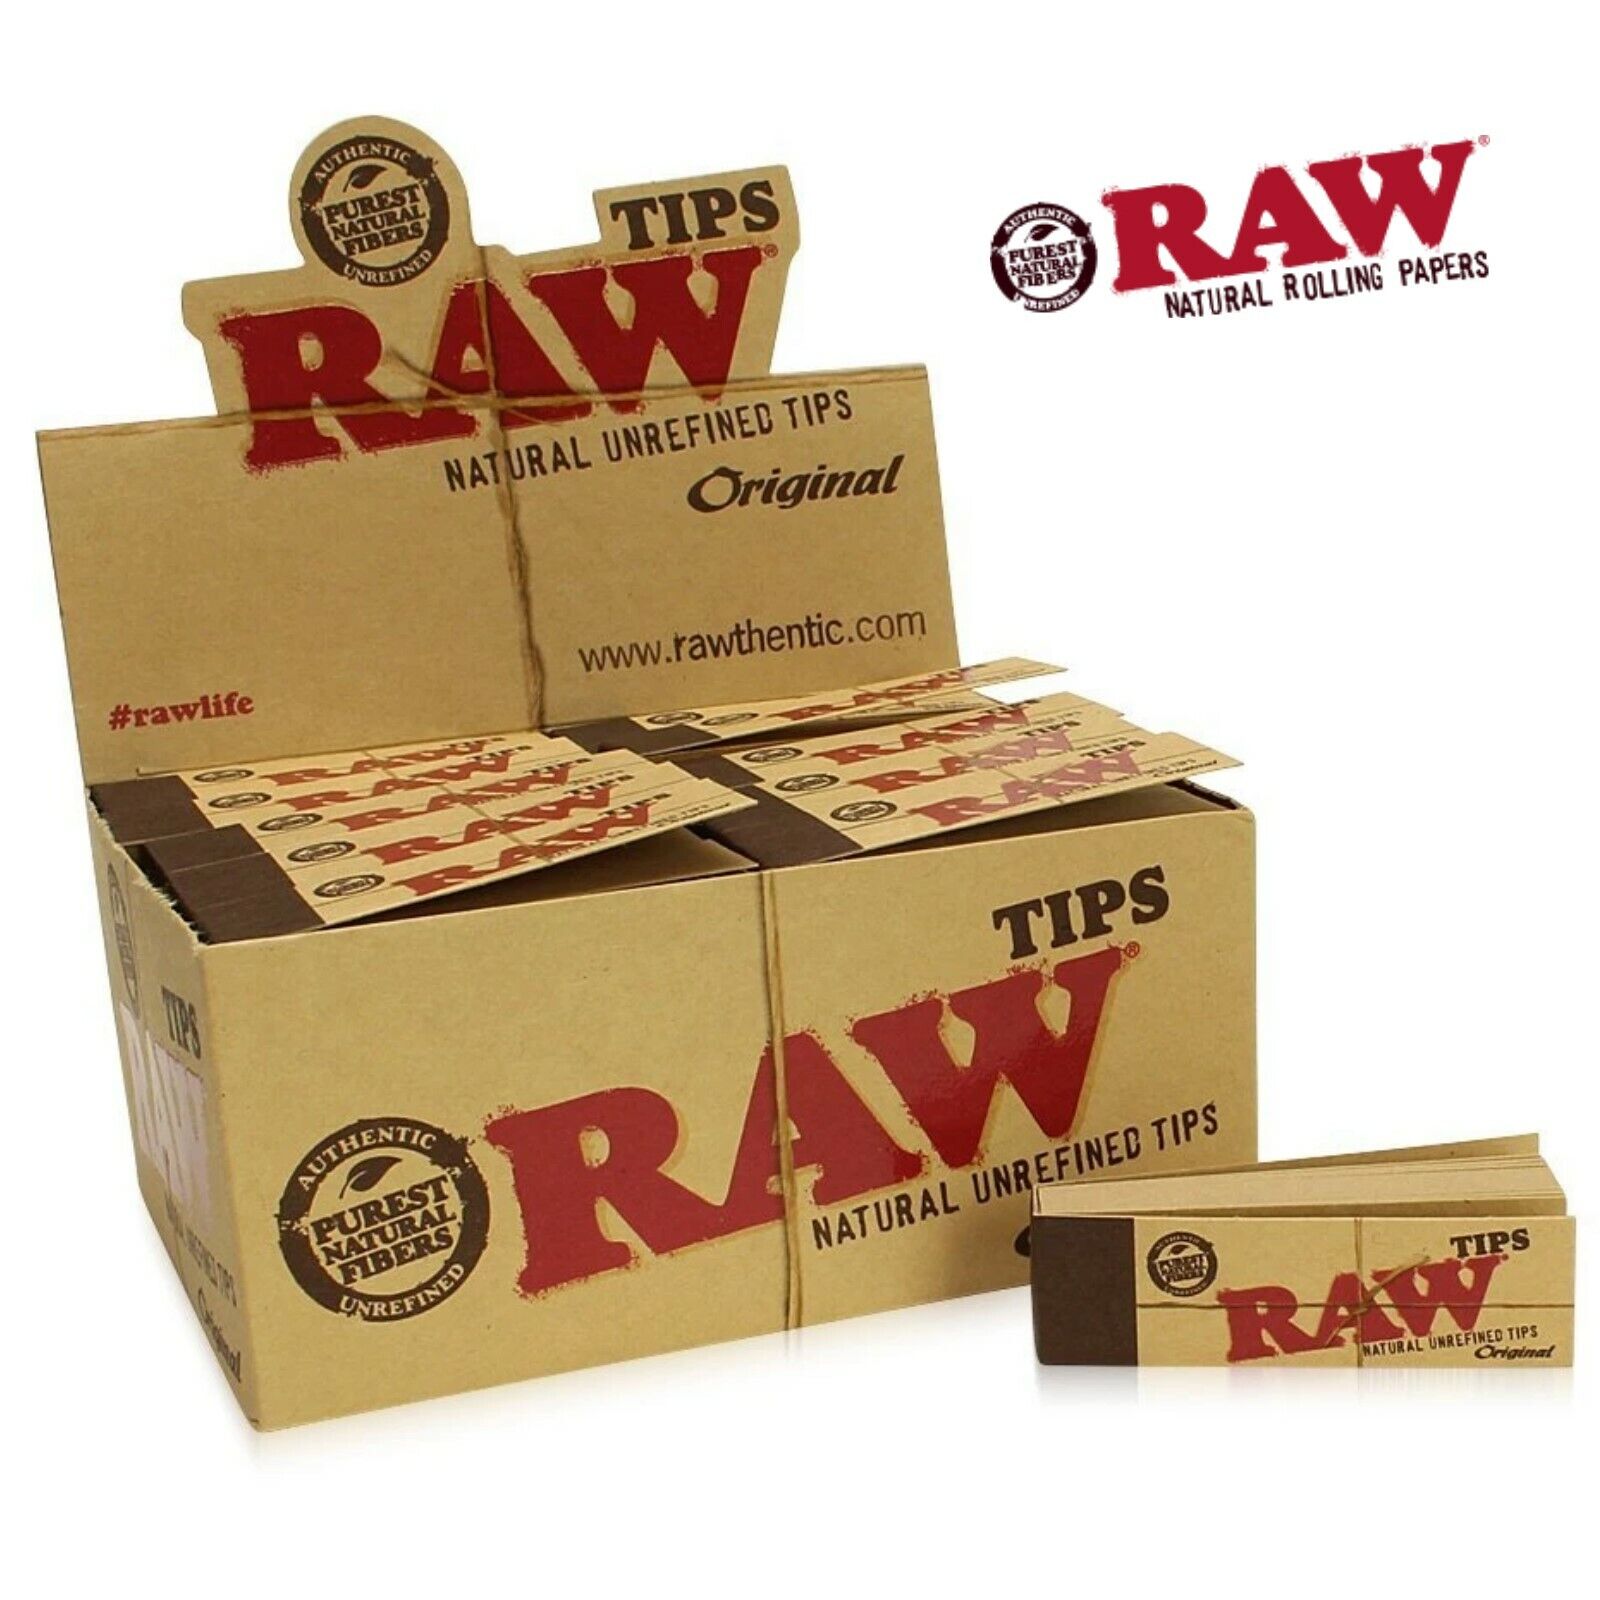 RAW Original Natural Unrefined Tips 50 Booklets (50 Tips per Pack) FULL BOX